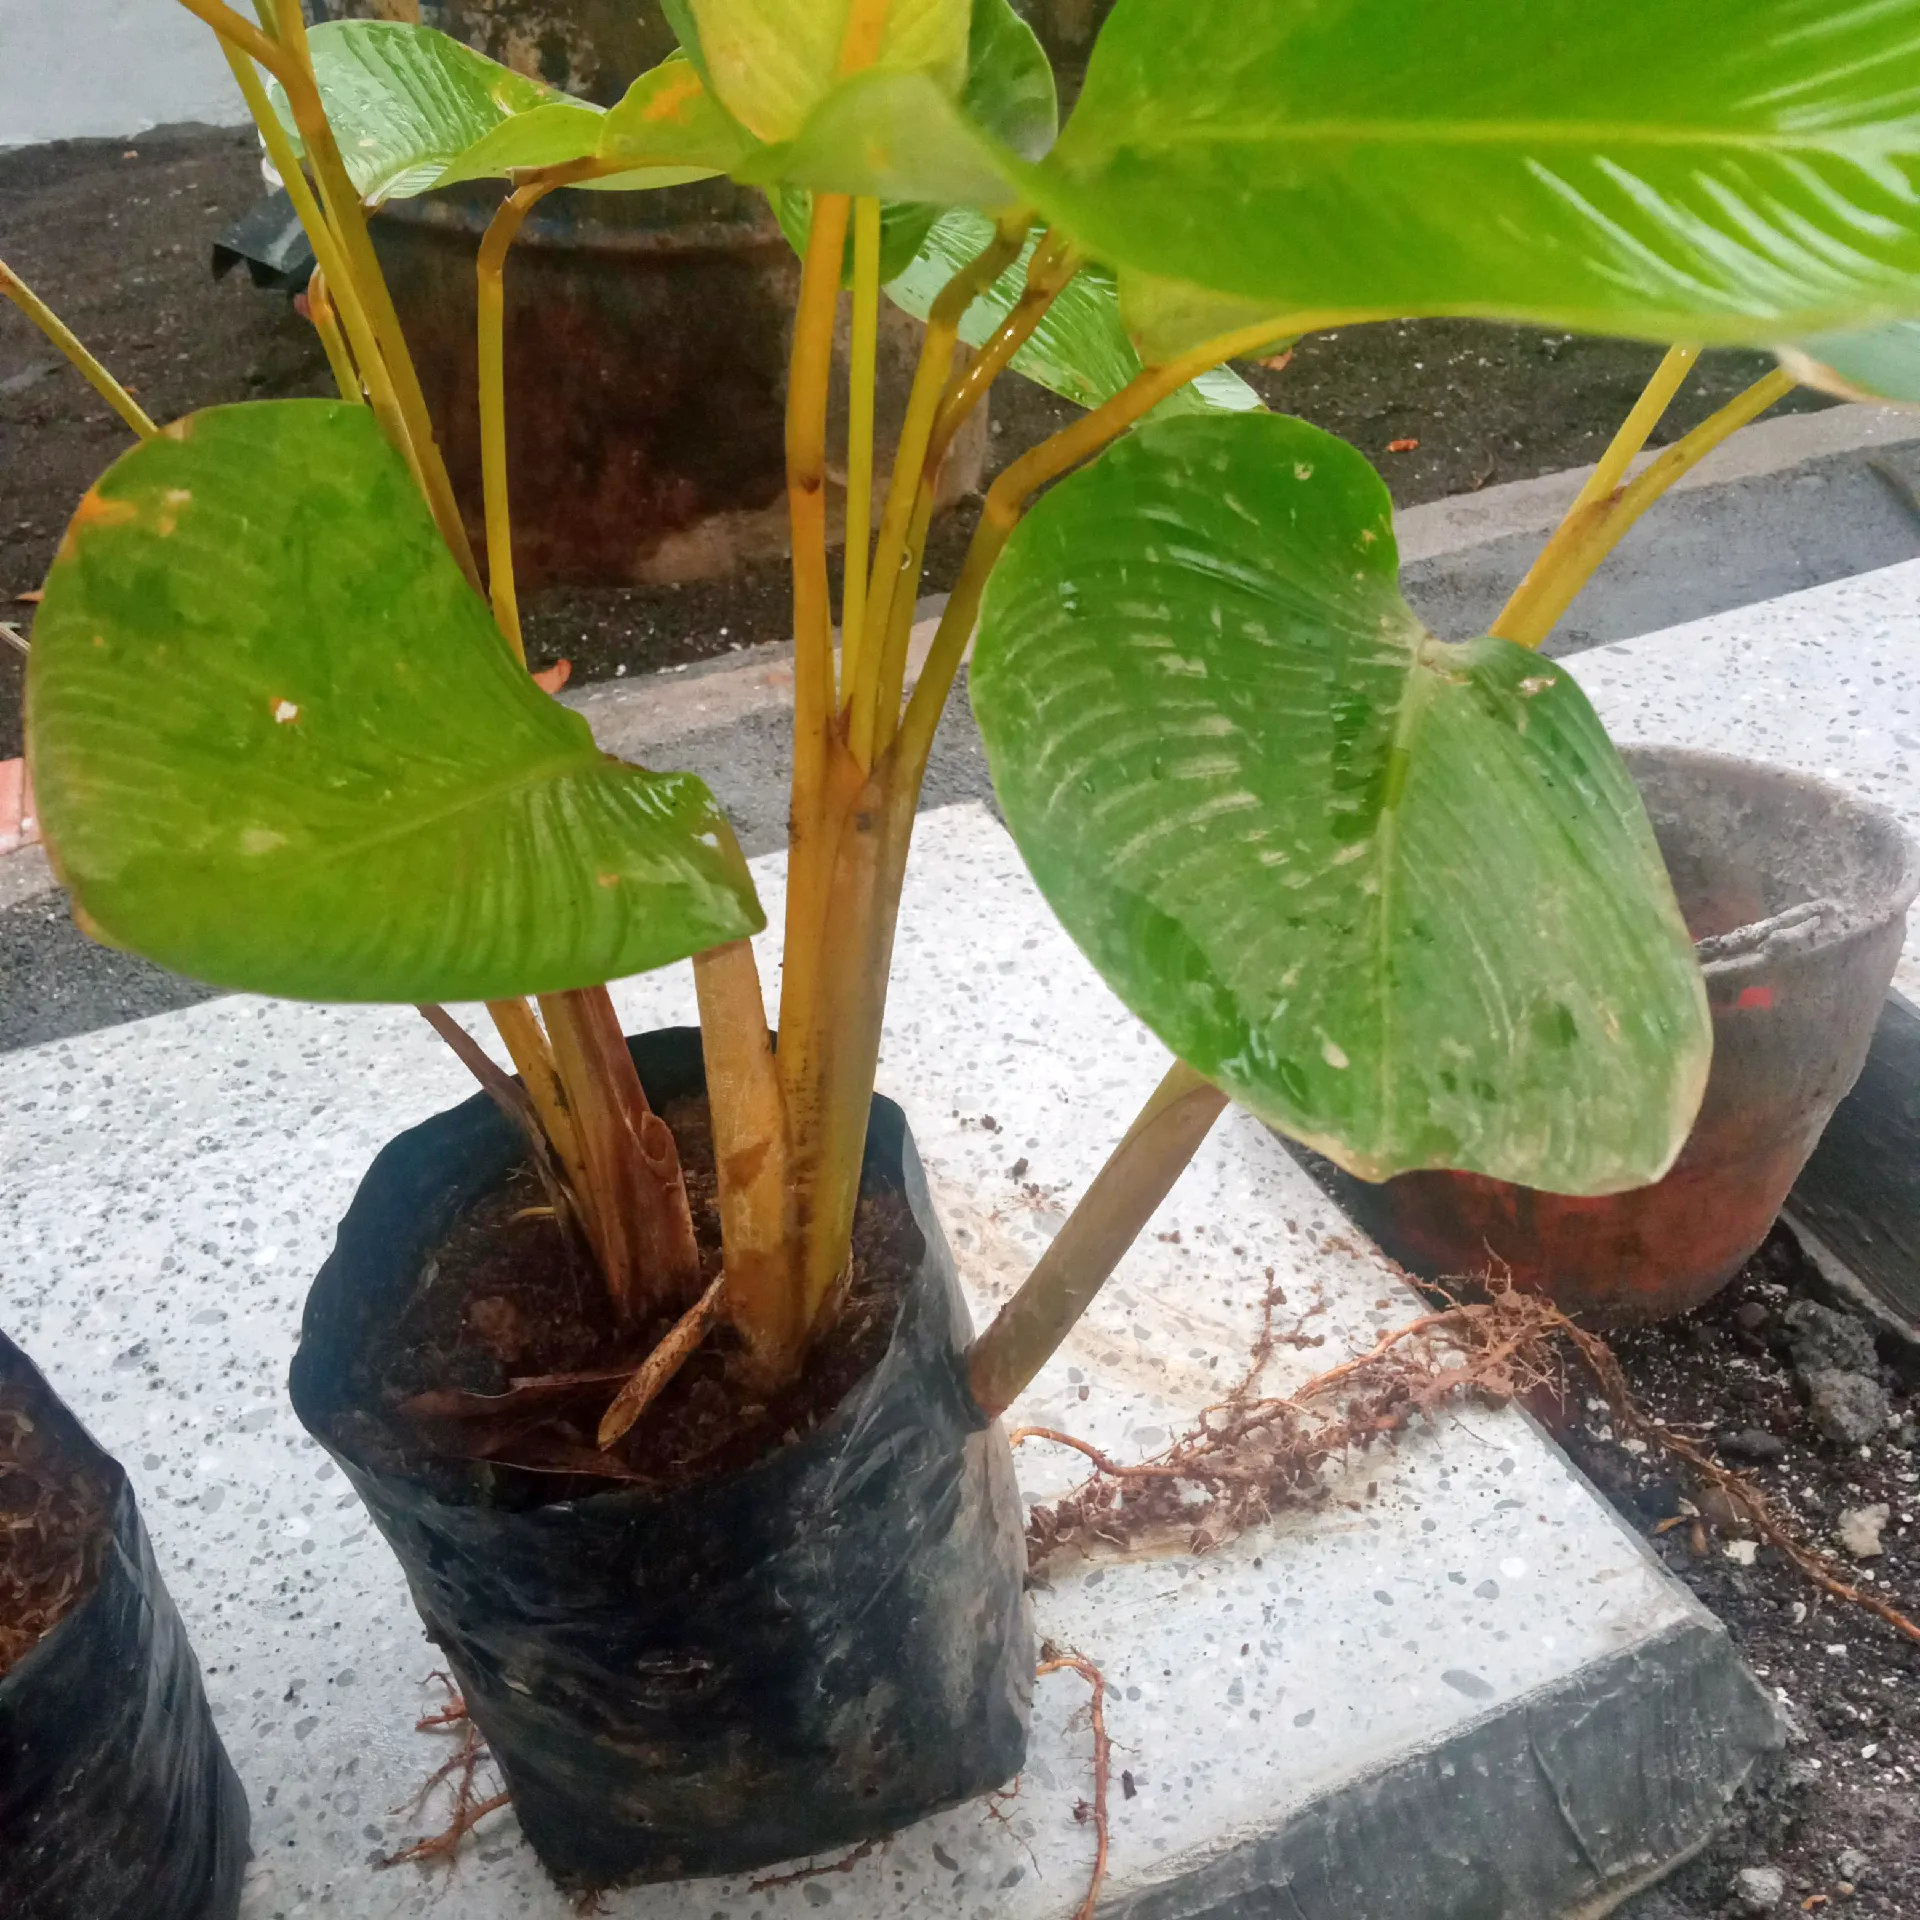 Tips merawat tanaman hidup di kamar kos 🪴